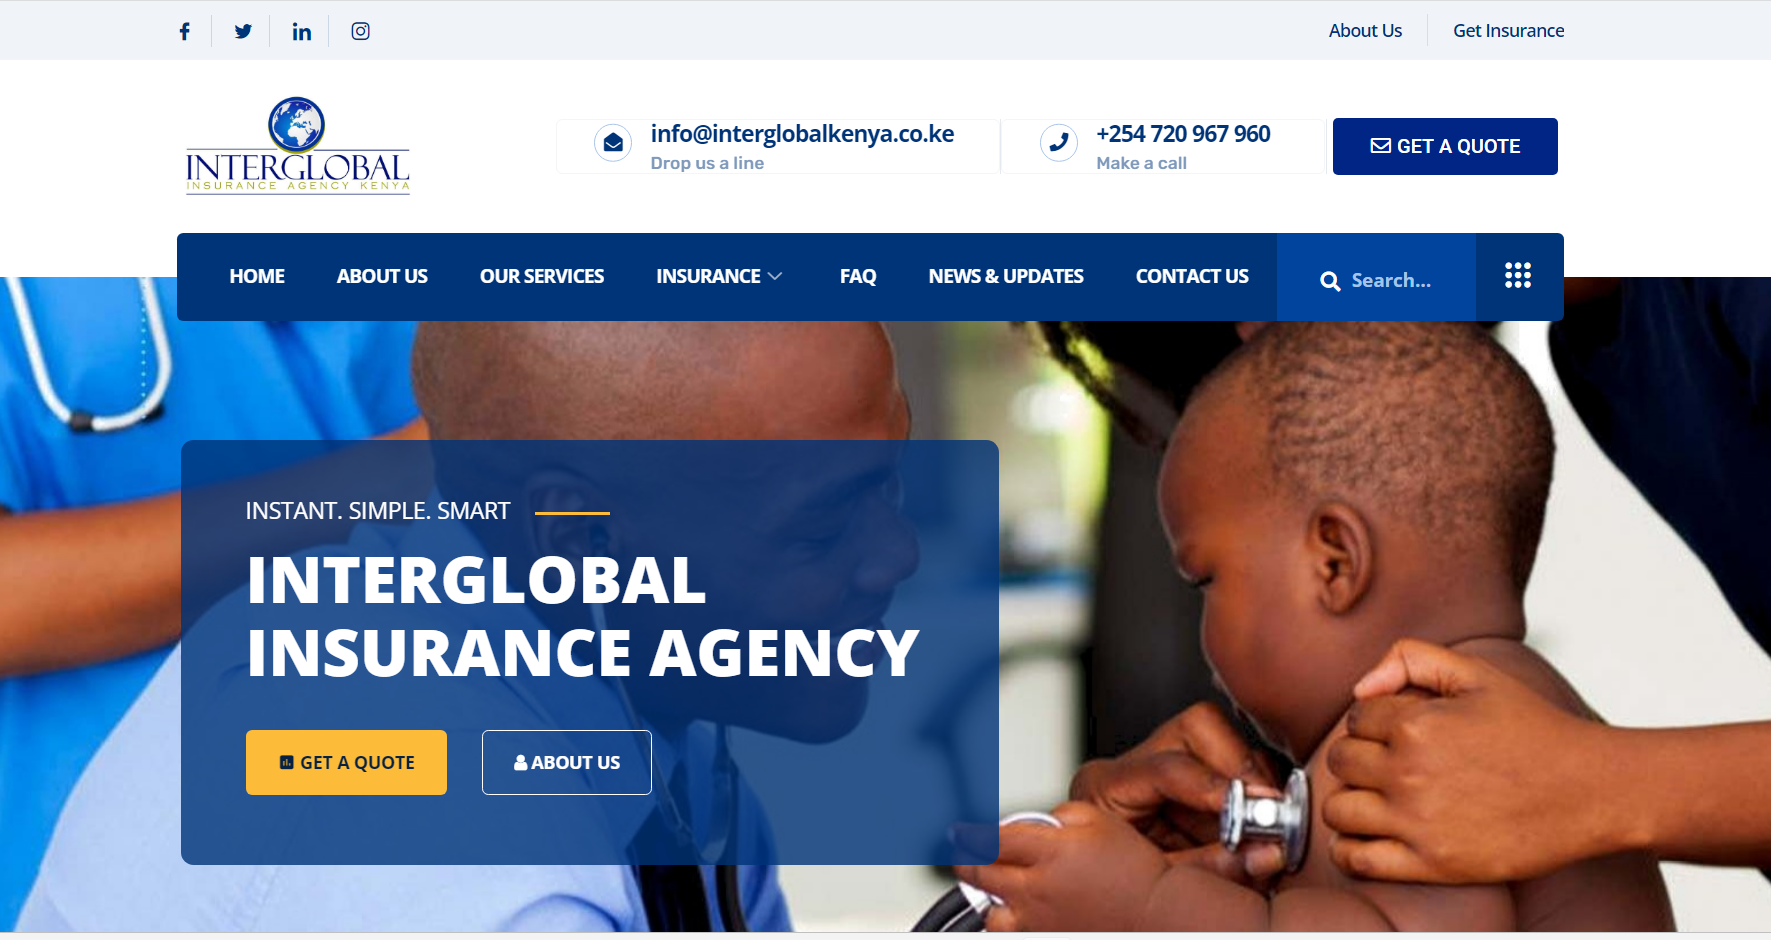 InterGlobal Insurance Agency